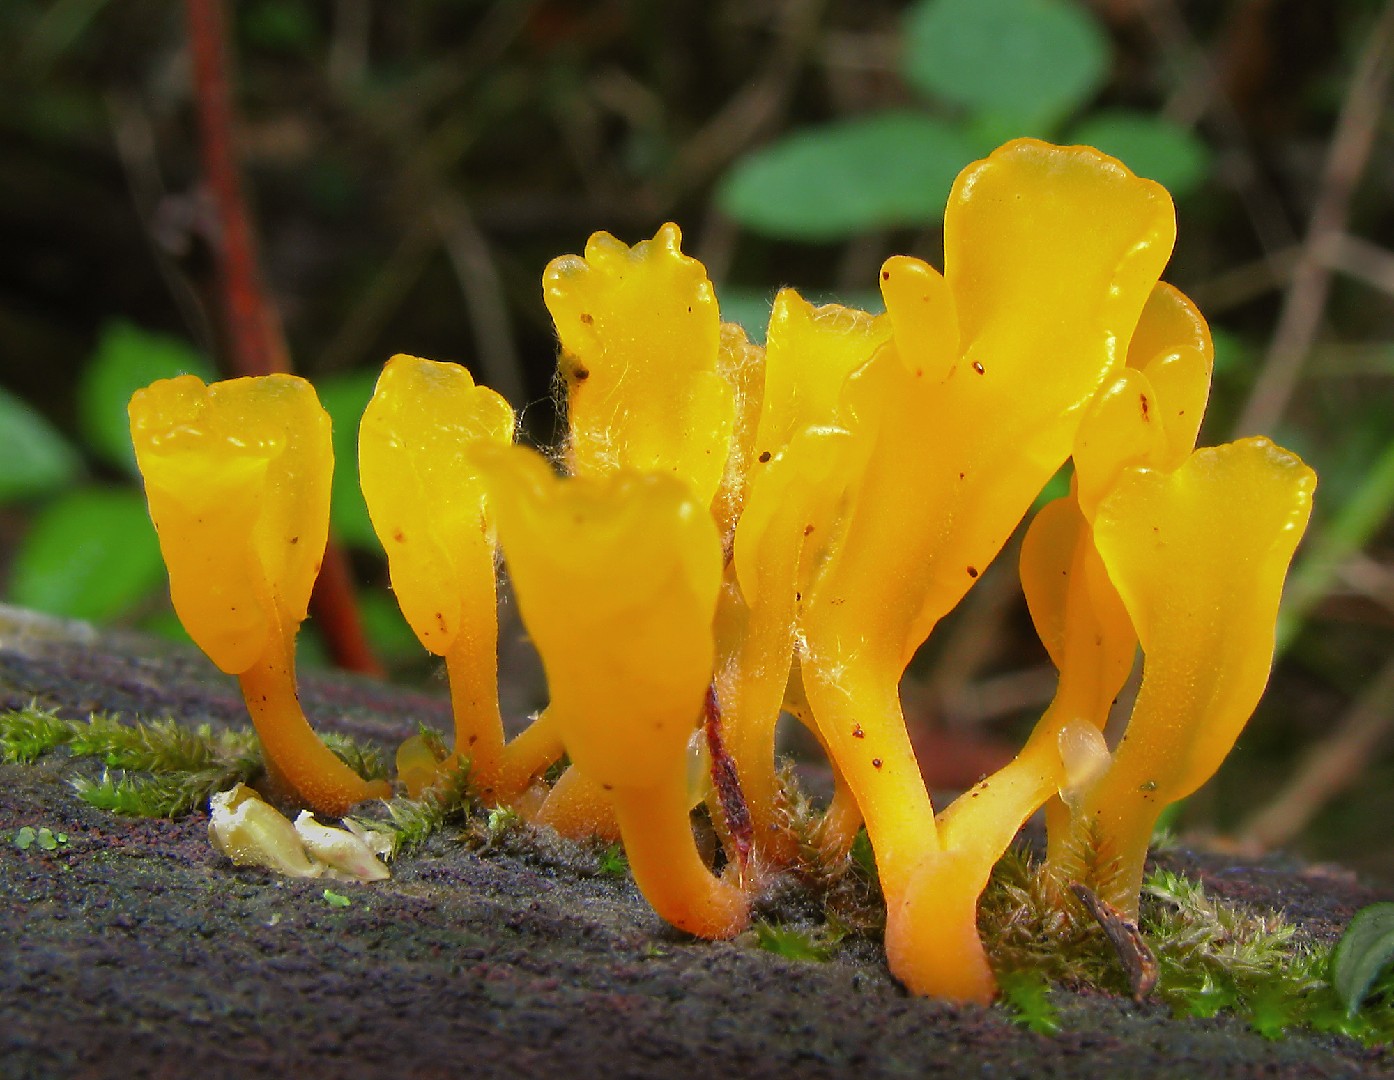 Fan-shaped jelly-fungus (Dacryopinax spathularia)